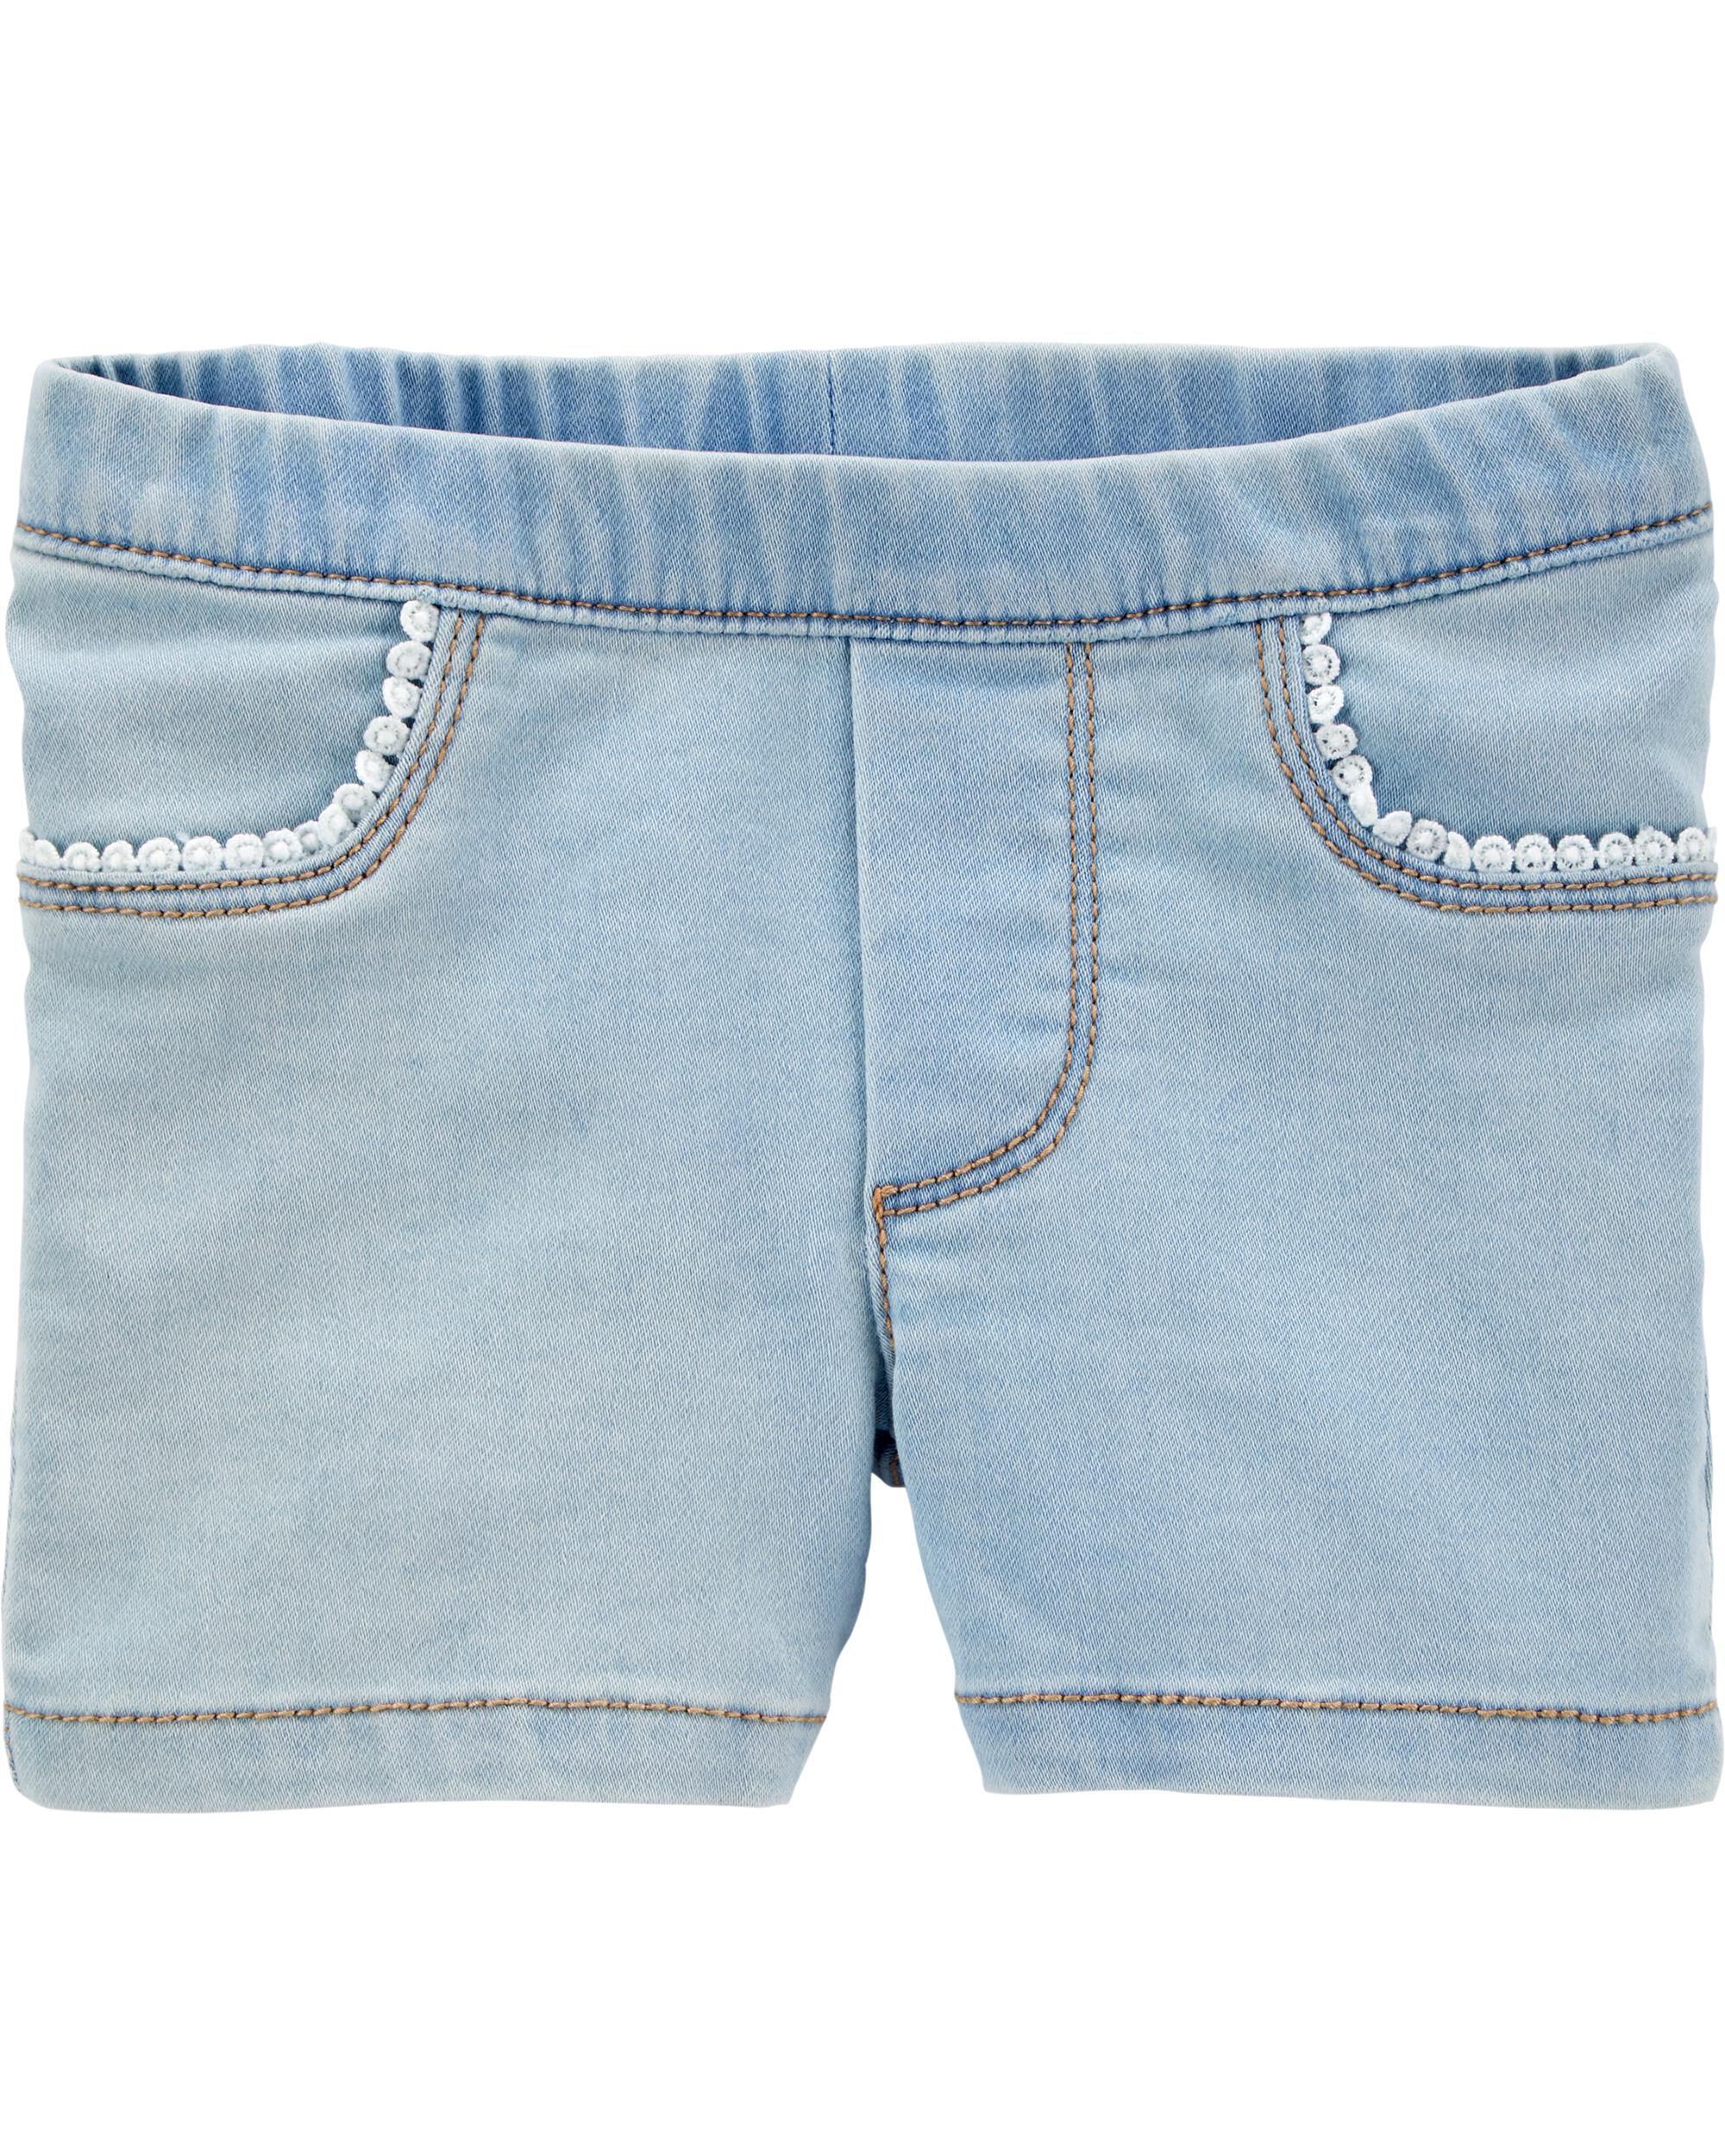 infant blue jean shorts